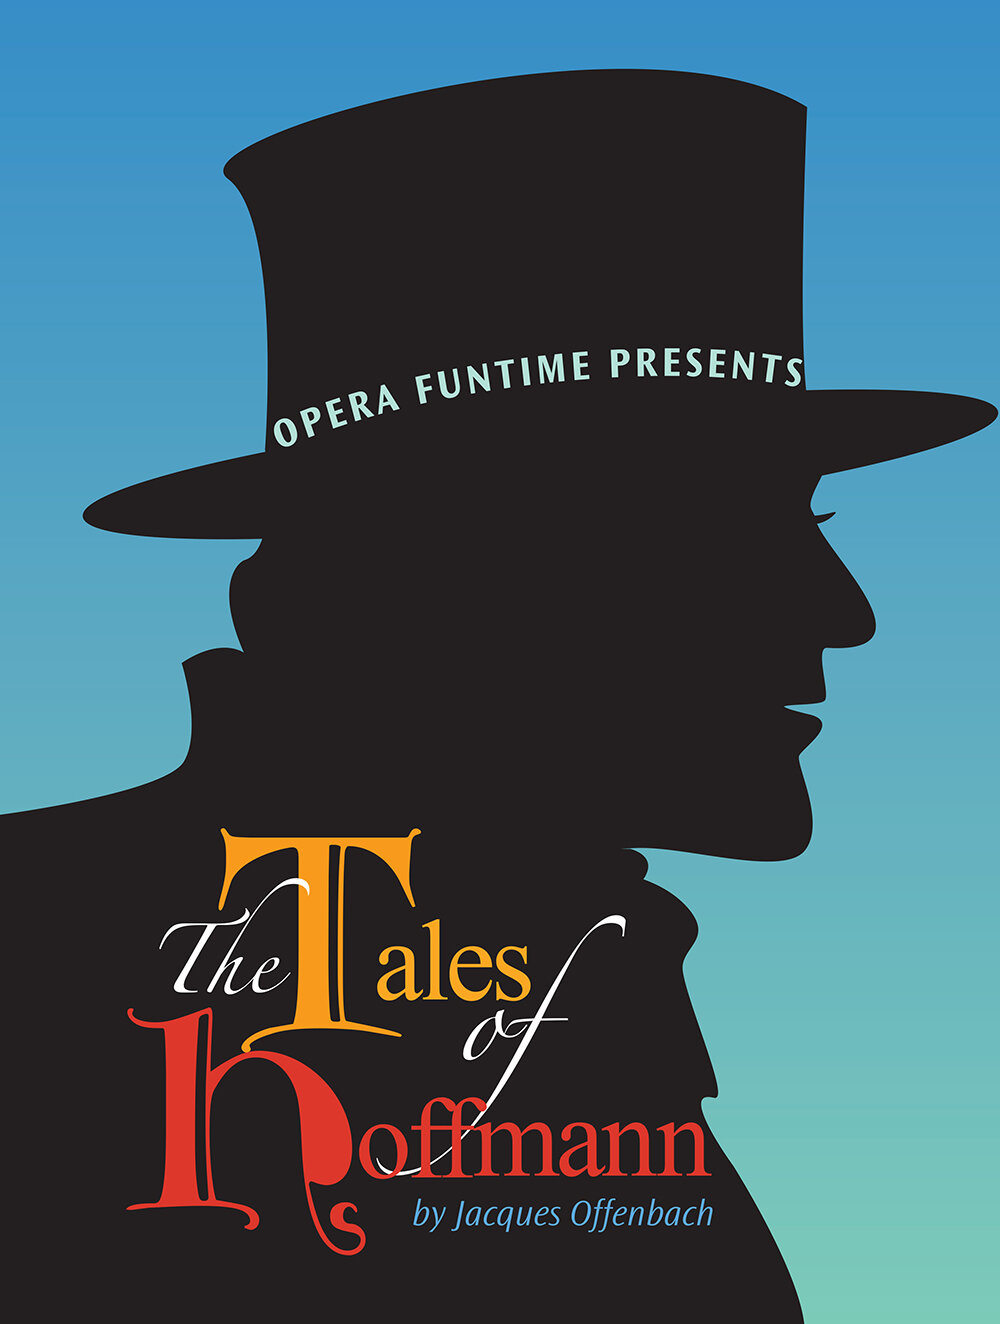 YPO Opera Funtime_The Tales of Hoffman.jpg